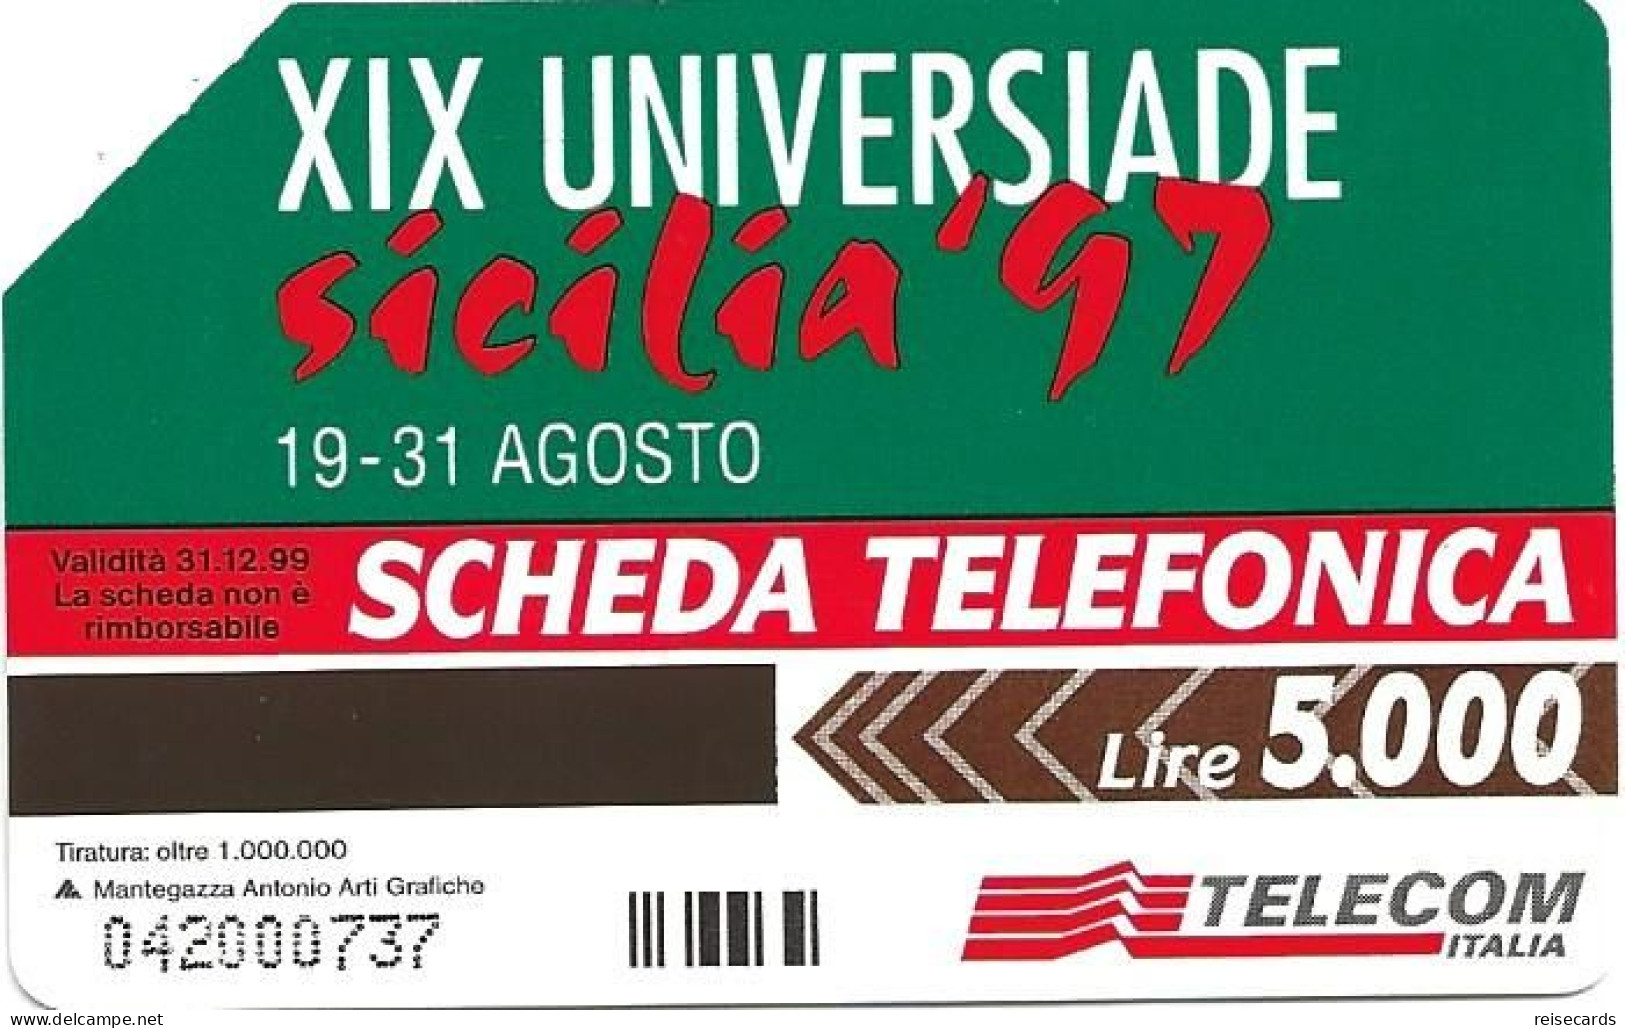 Italy: Telecom Italia - XIX Universiade Sicilia '97 - Public Advertising